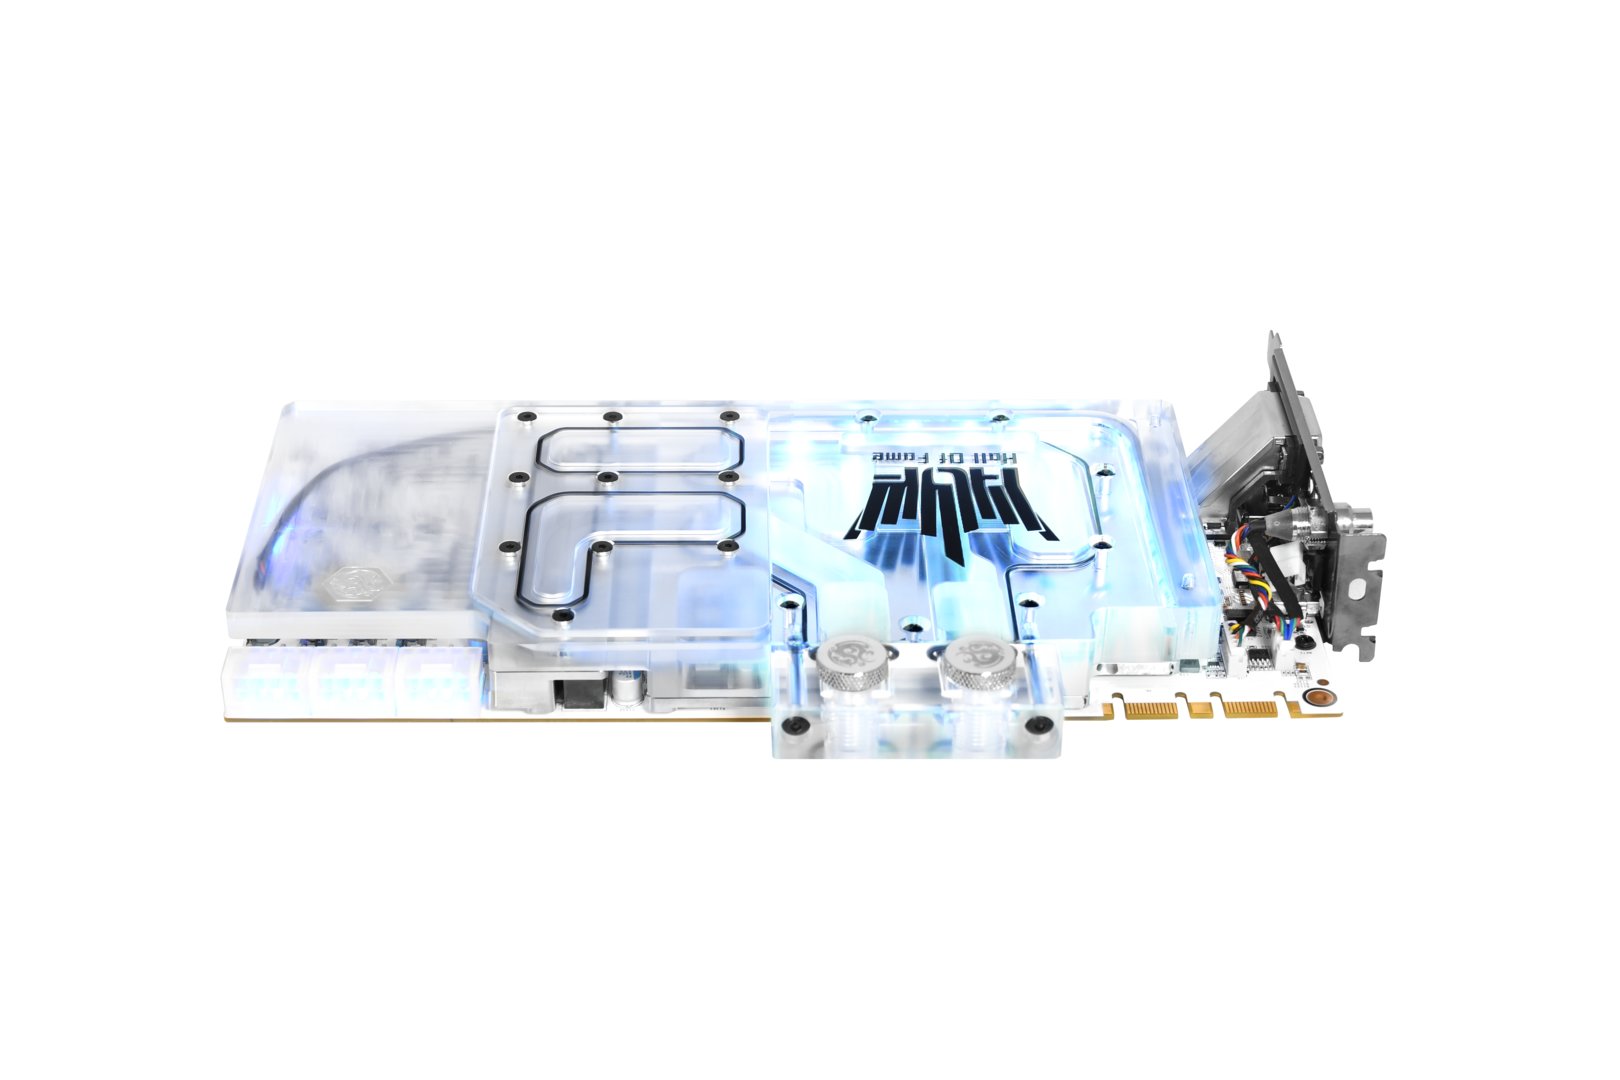 GeForce GTX 1080 Ti Hall of Fame Watercooled